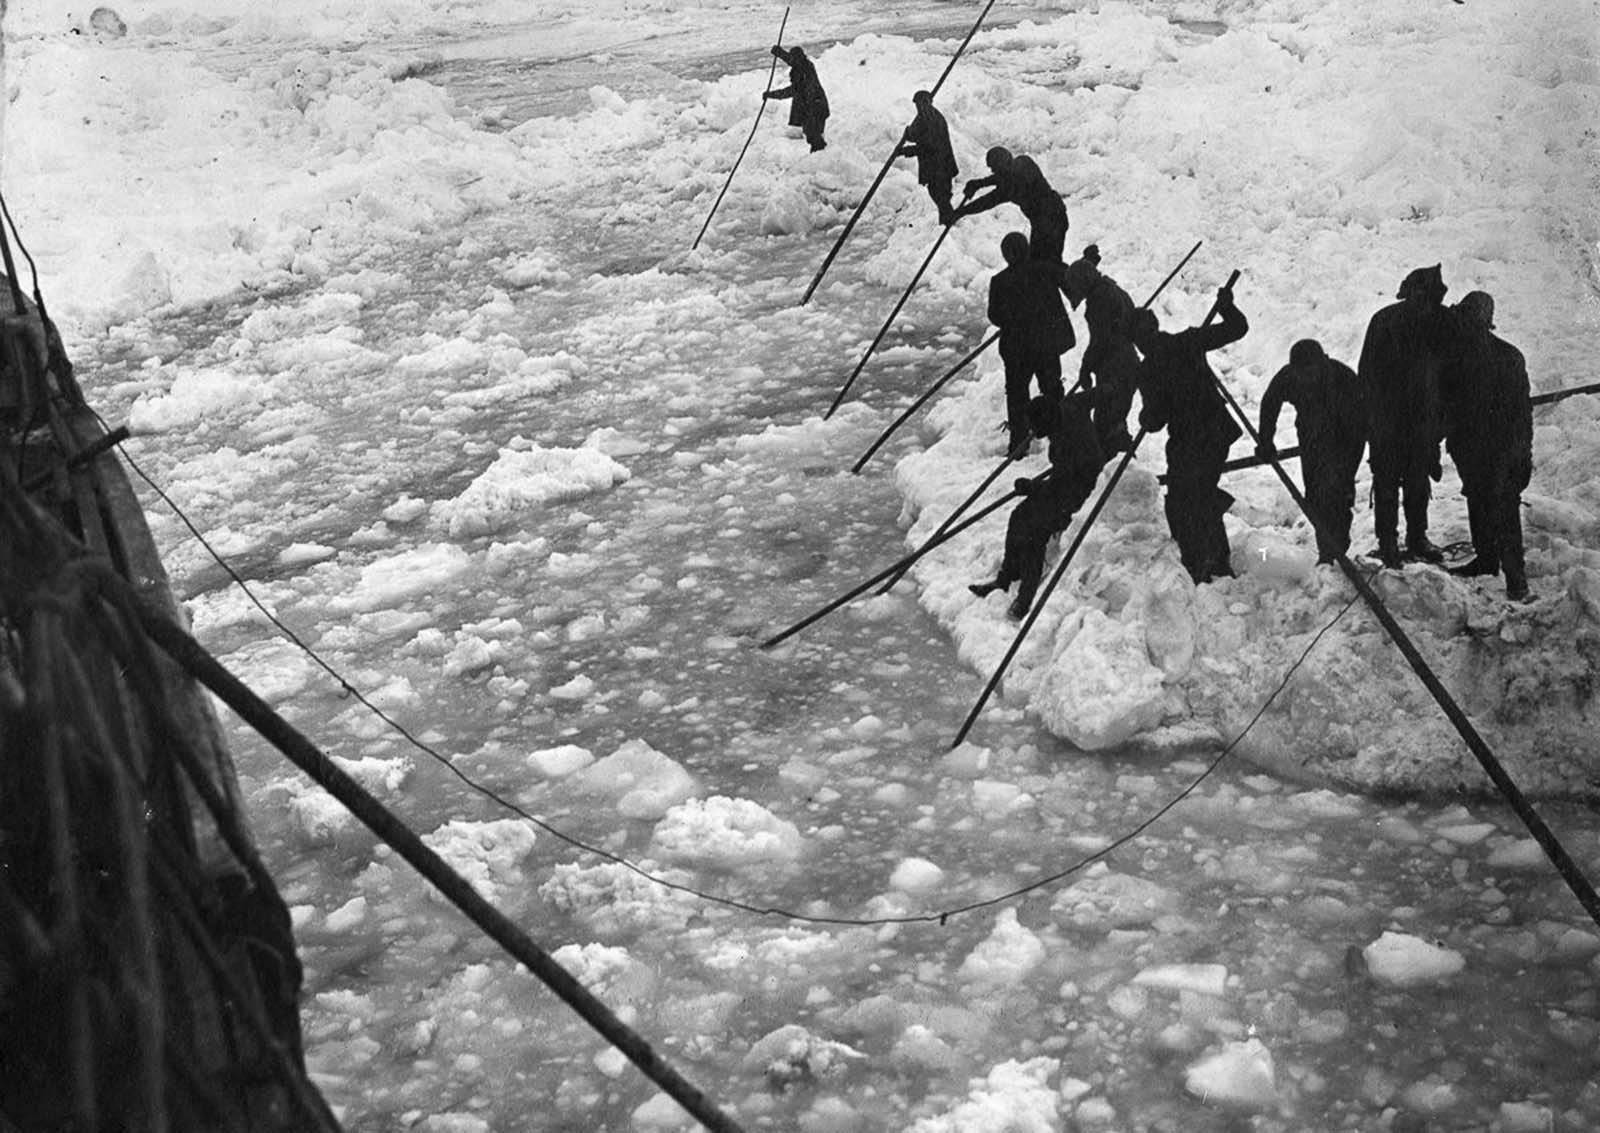 Shackleton Antarctica endurance photographs